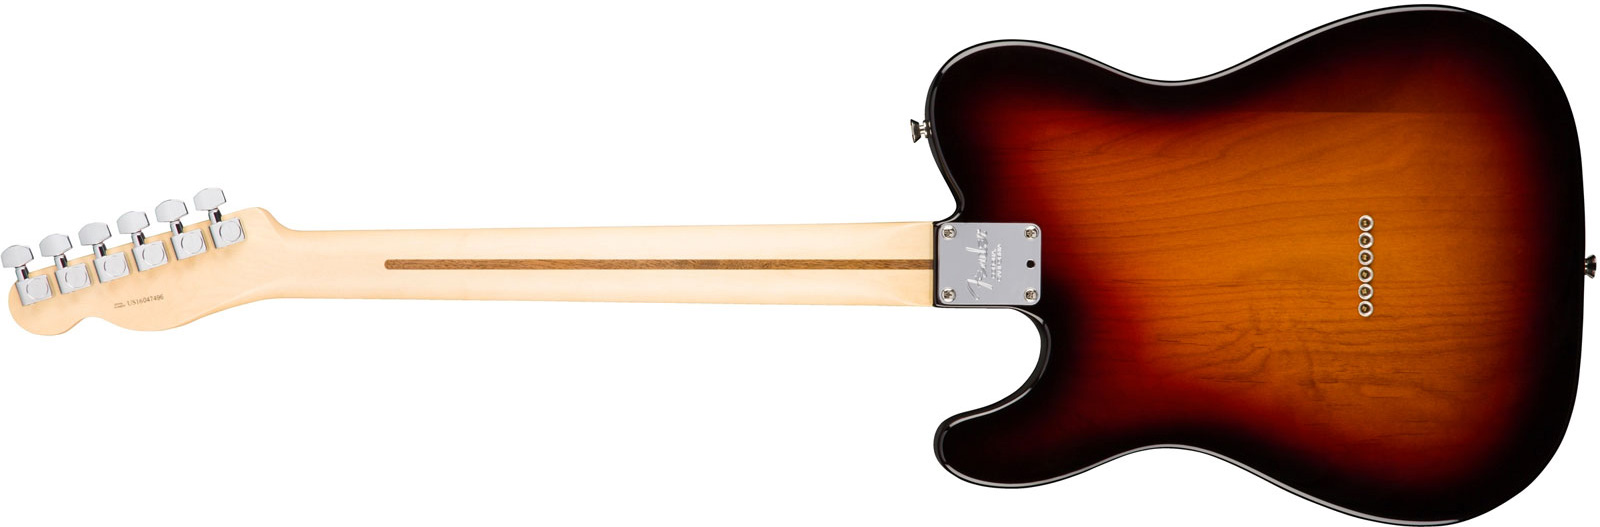 Fender Tele American Professional 2s Usa Rw - 3-color Sunburst - E-Gitarre in Str-Form - Variation 1